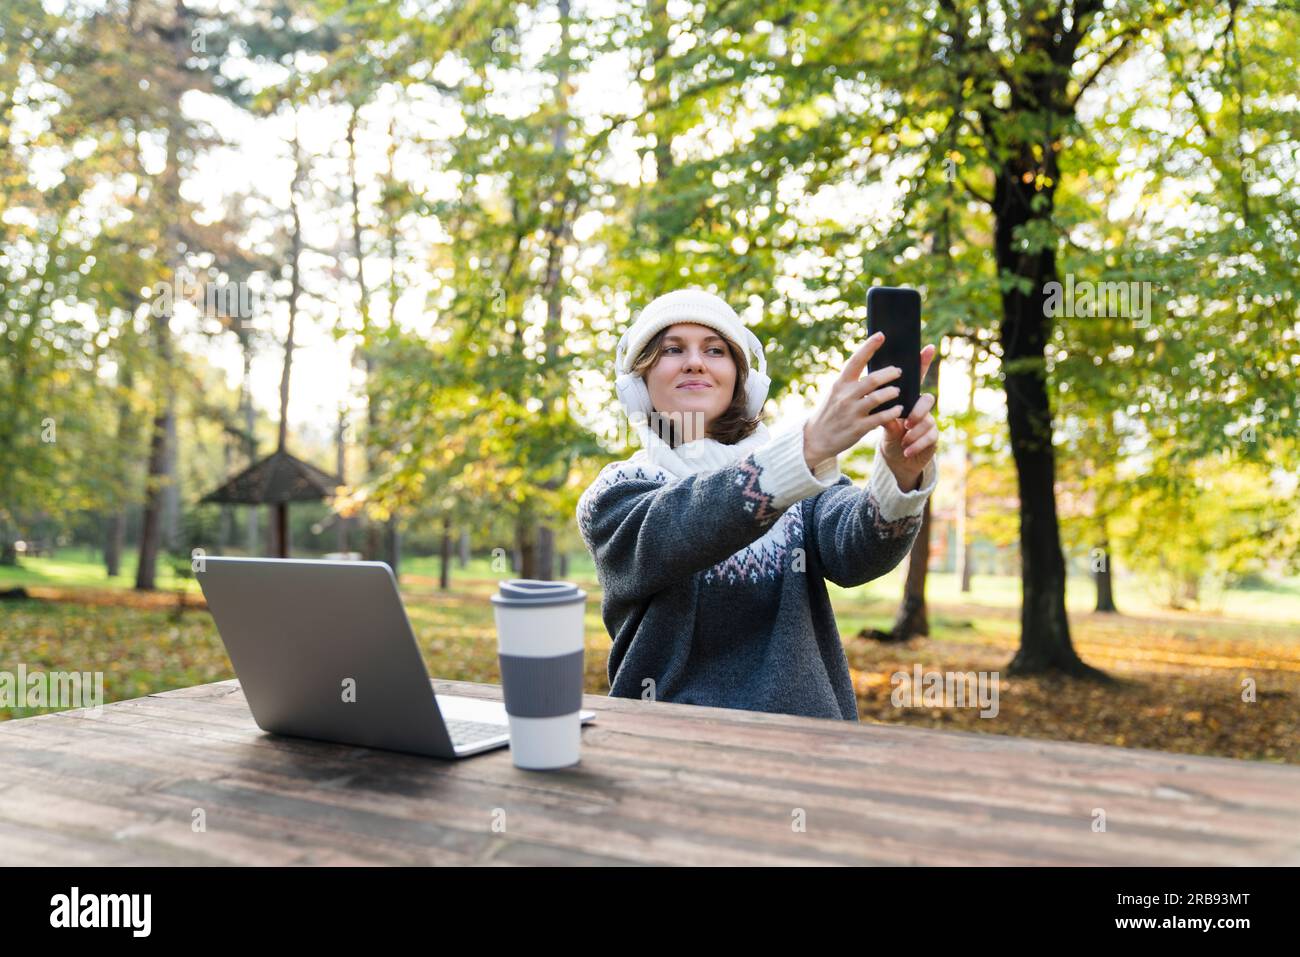 Freelancer working on laptop in autumn park. Stock Photo